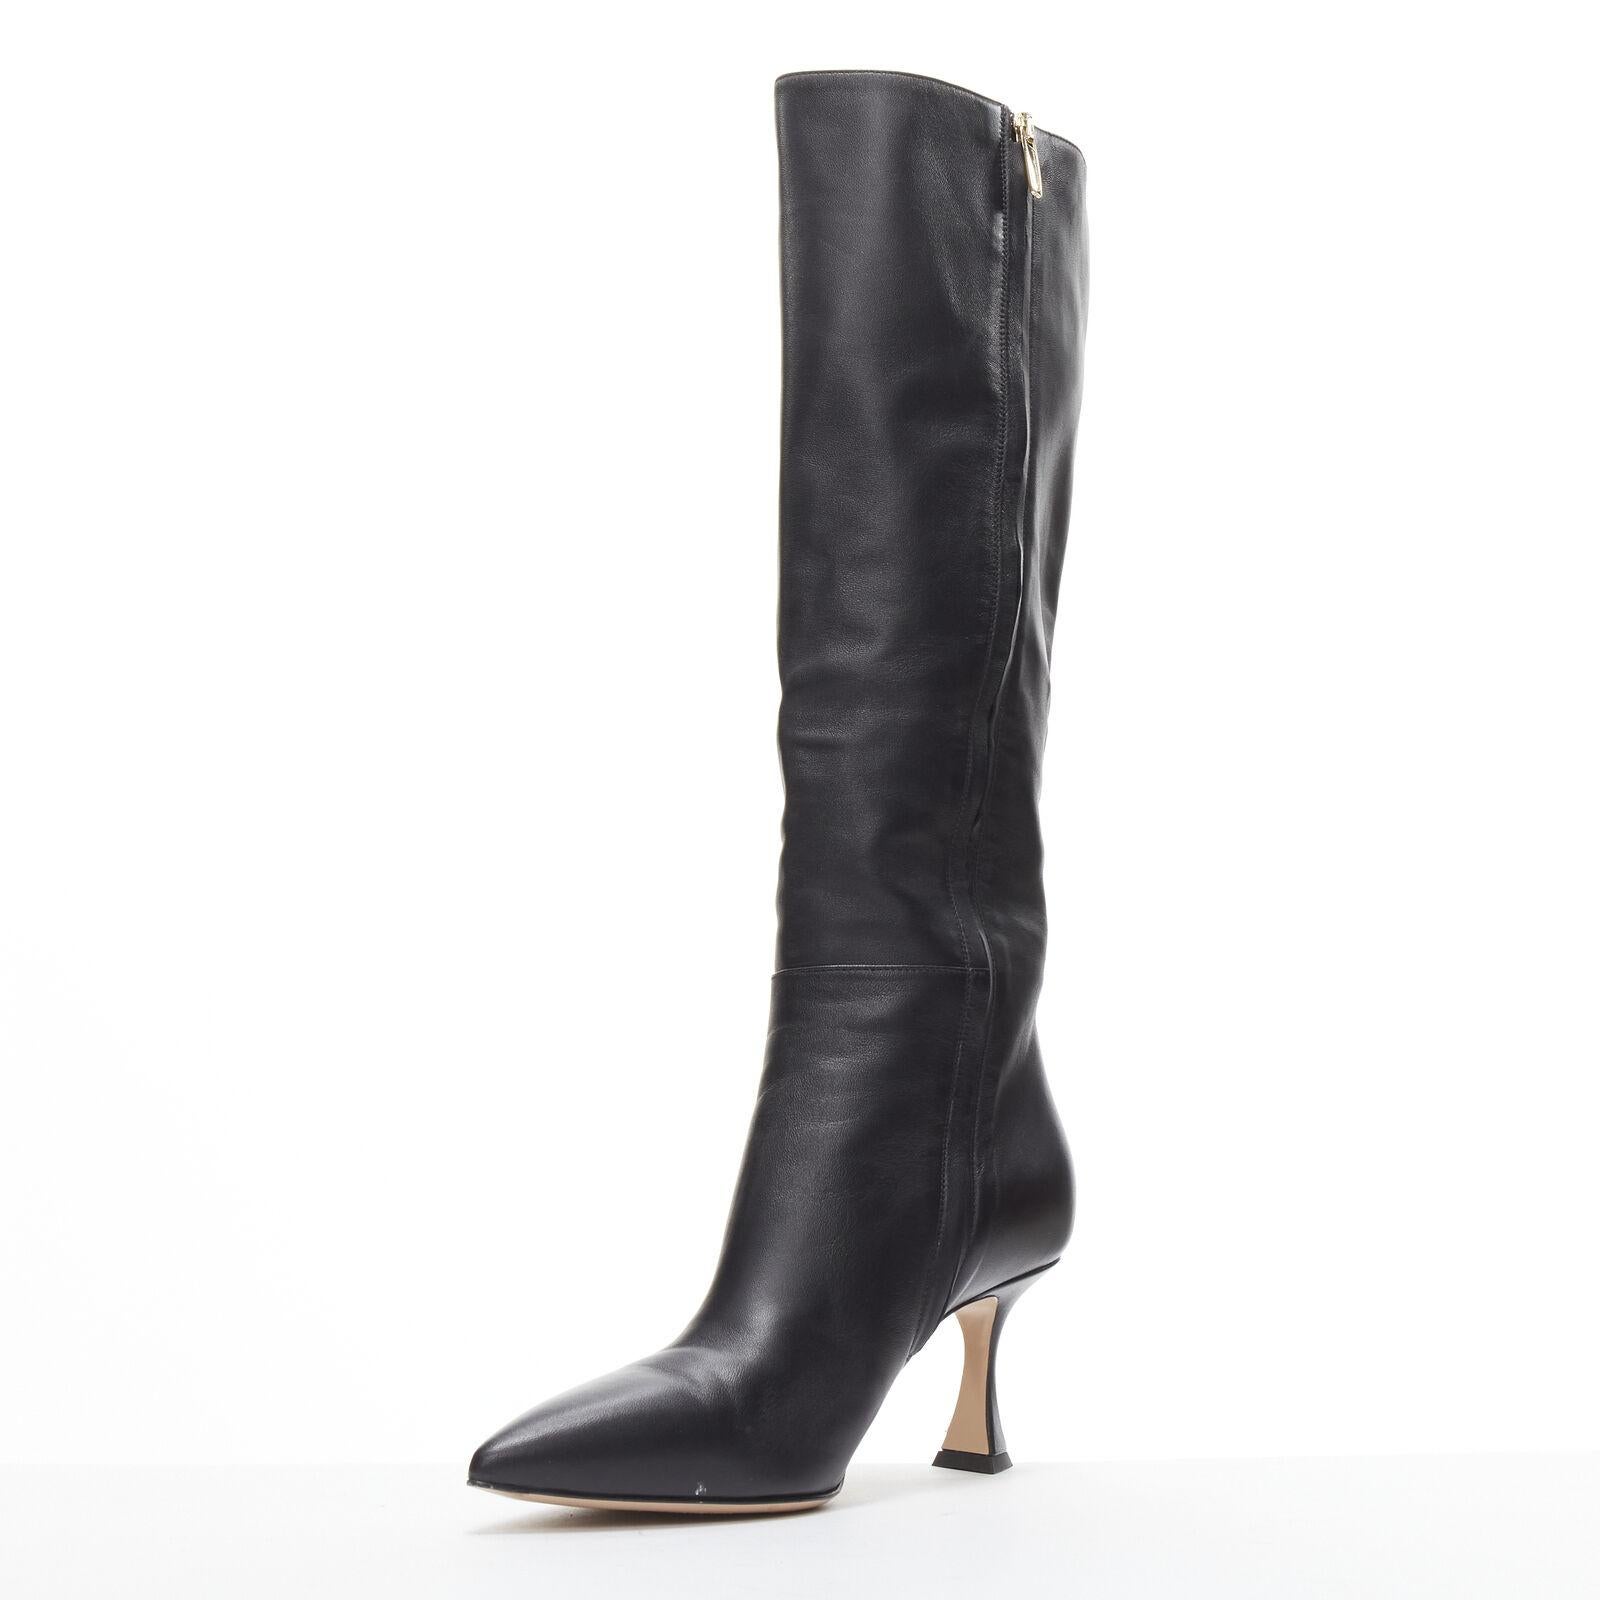 GIANVITO ROSSI black leather point toe spool heeled tall boots EU39 US9 1